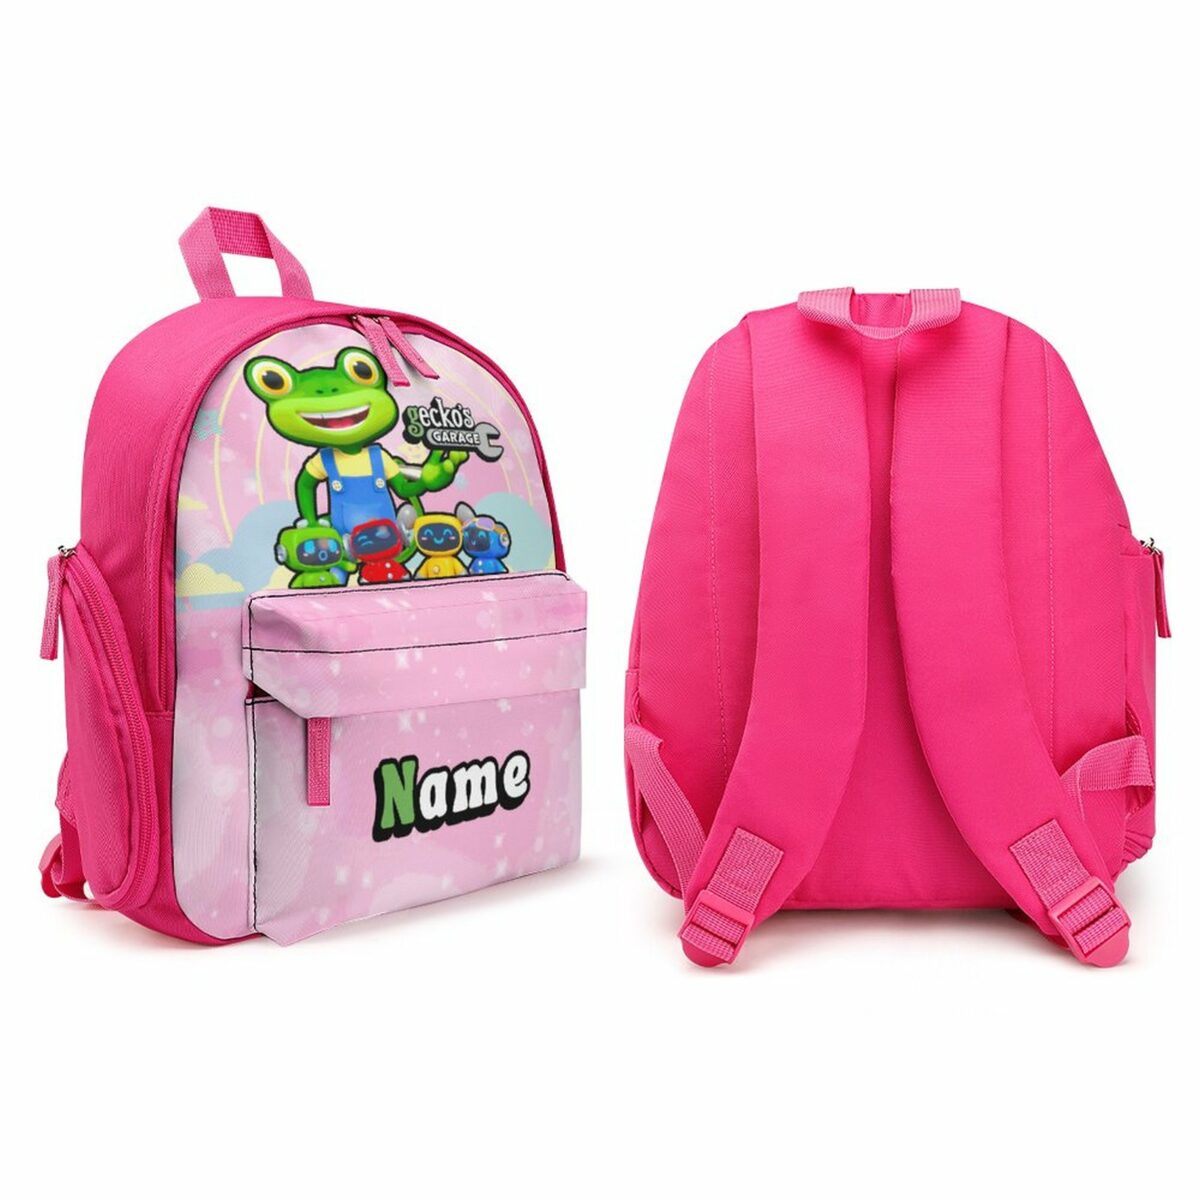 Personalized Gecko’s Garage Pink Children’s School Bag – Toddler’s Backpack Cool Kiddo 16